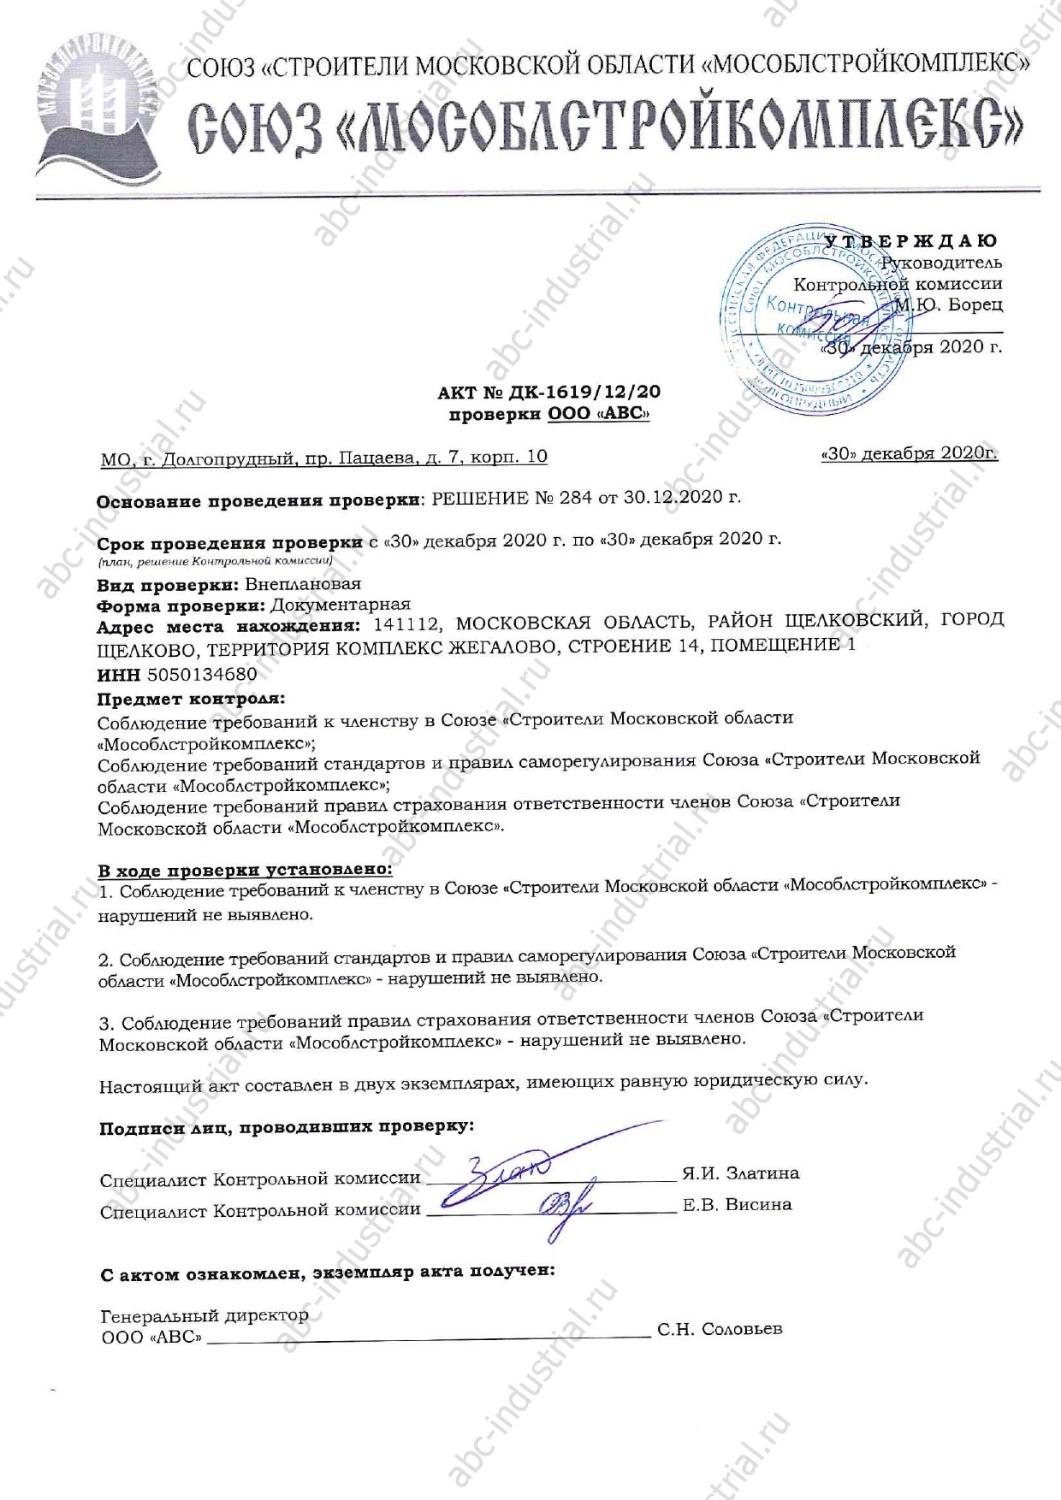 Акт проверки от Союза "Мособлстройкомплекс"